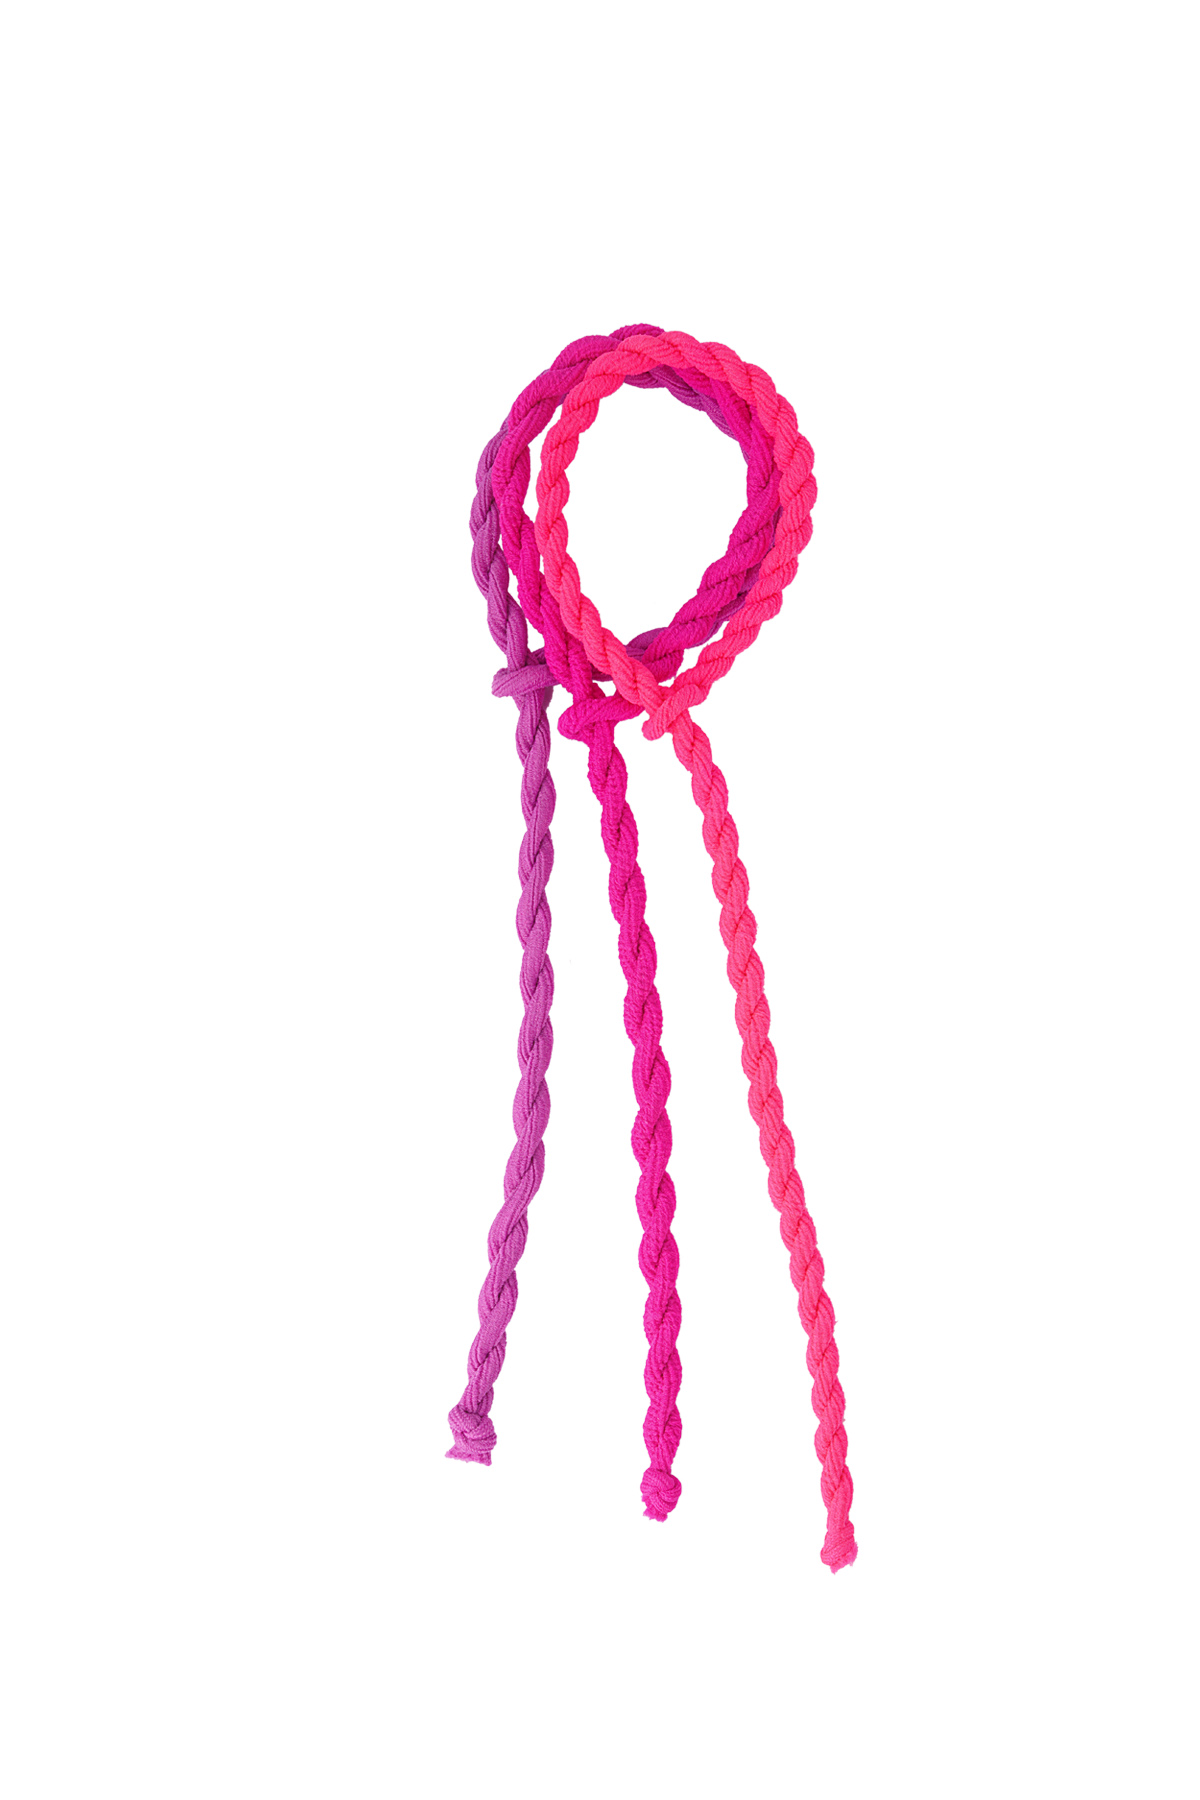 Twisted hair elastic - pink & purple h5 